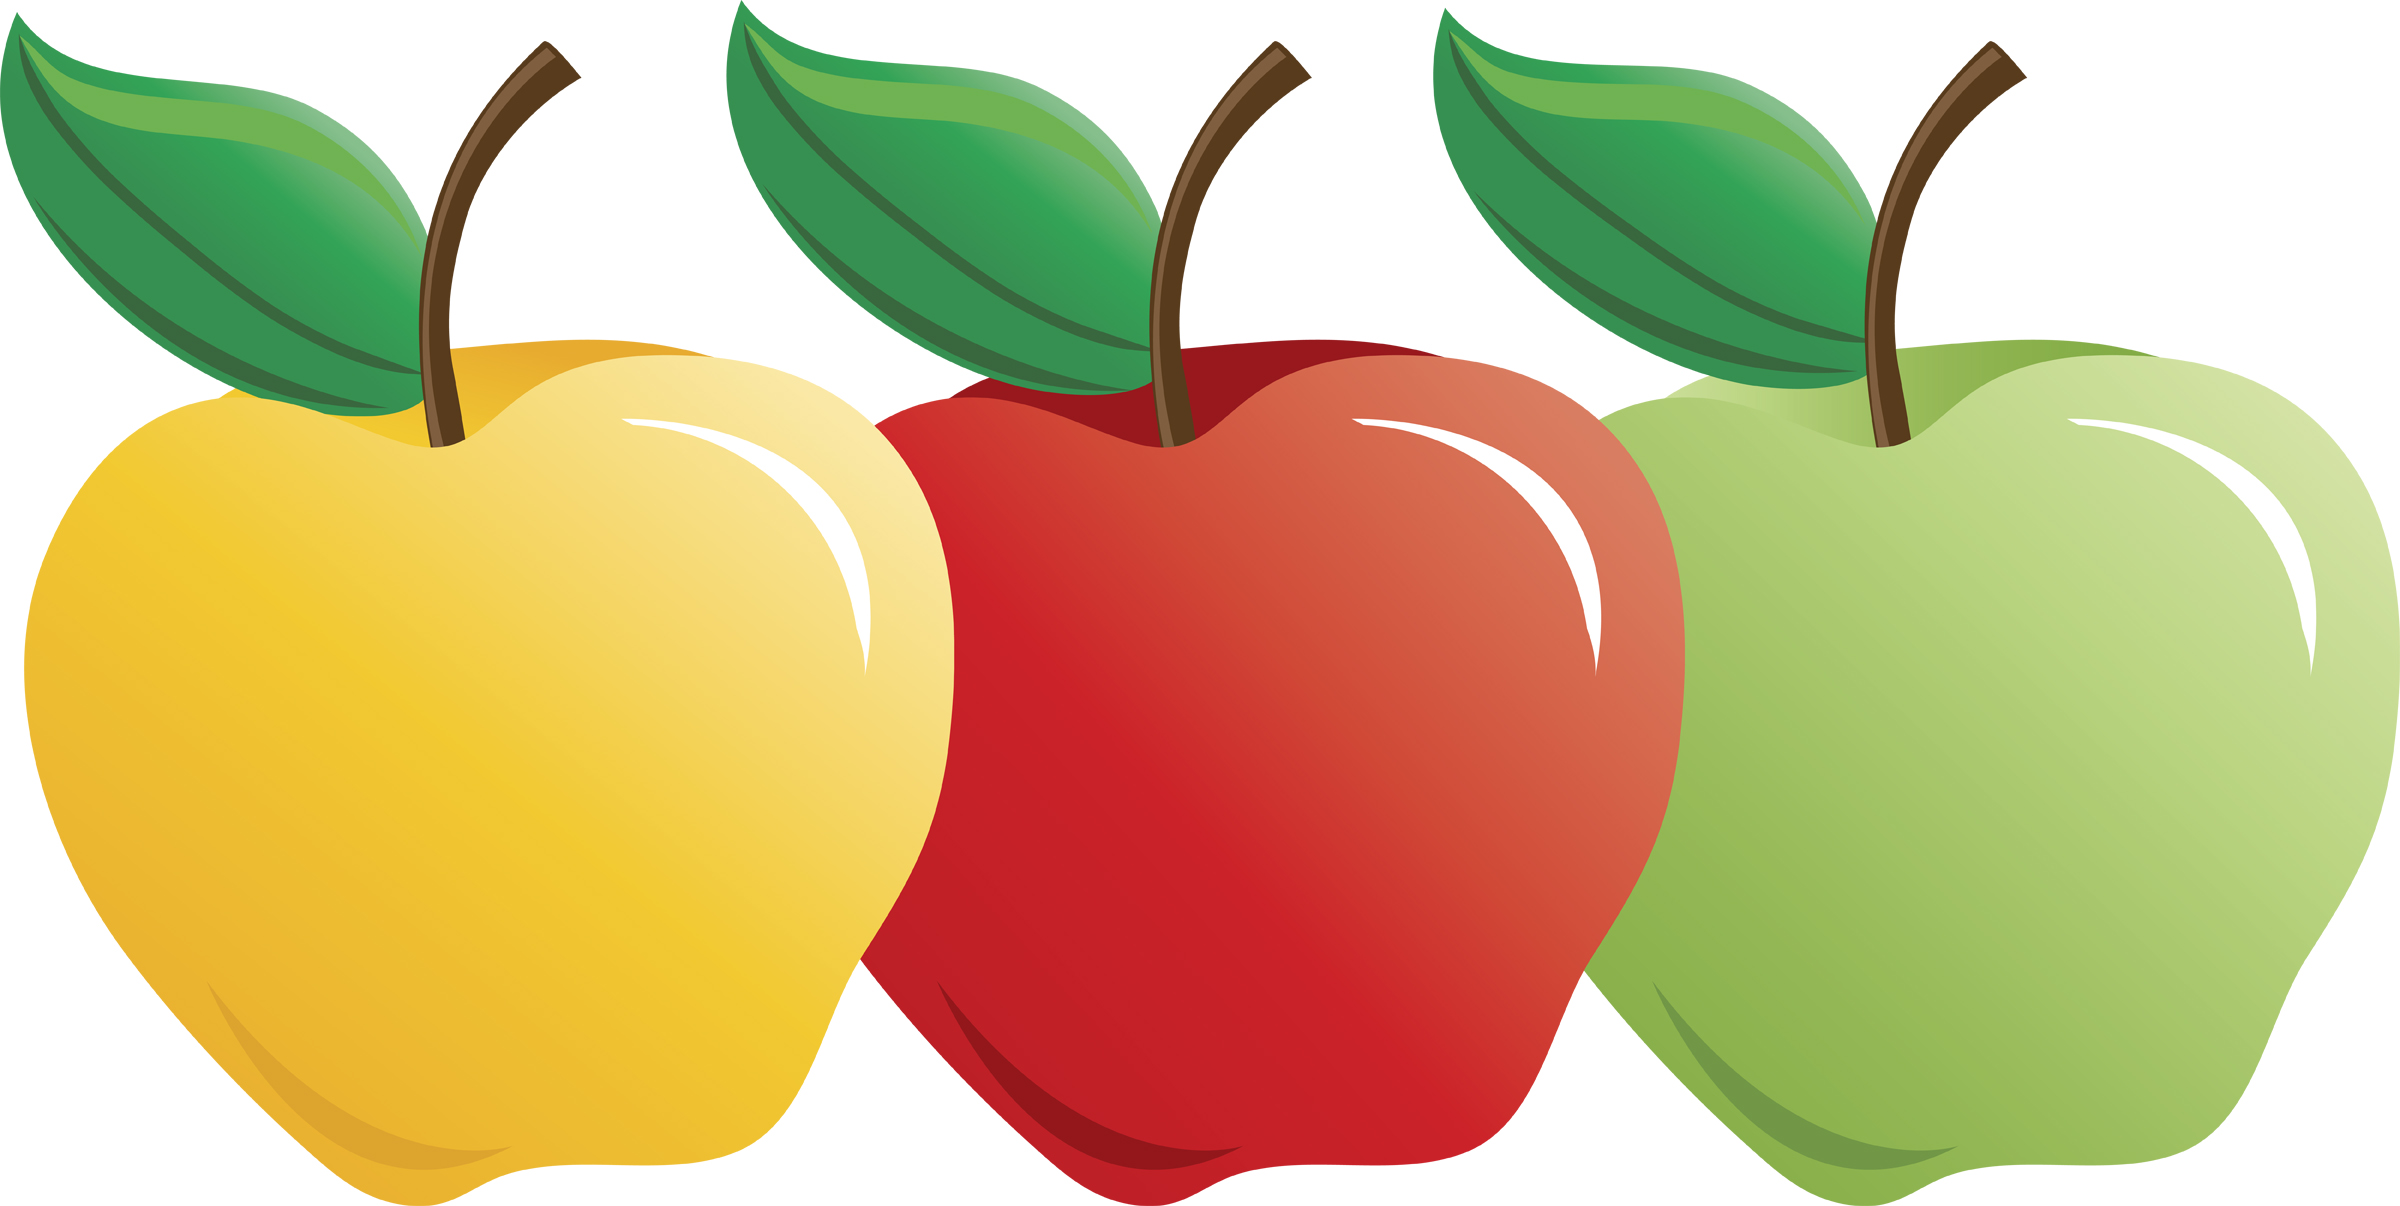 Clip art pictures of apples - - Apples Clip Art